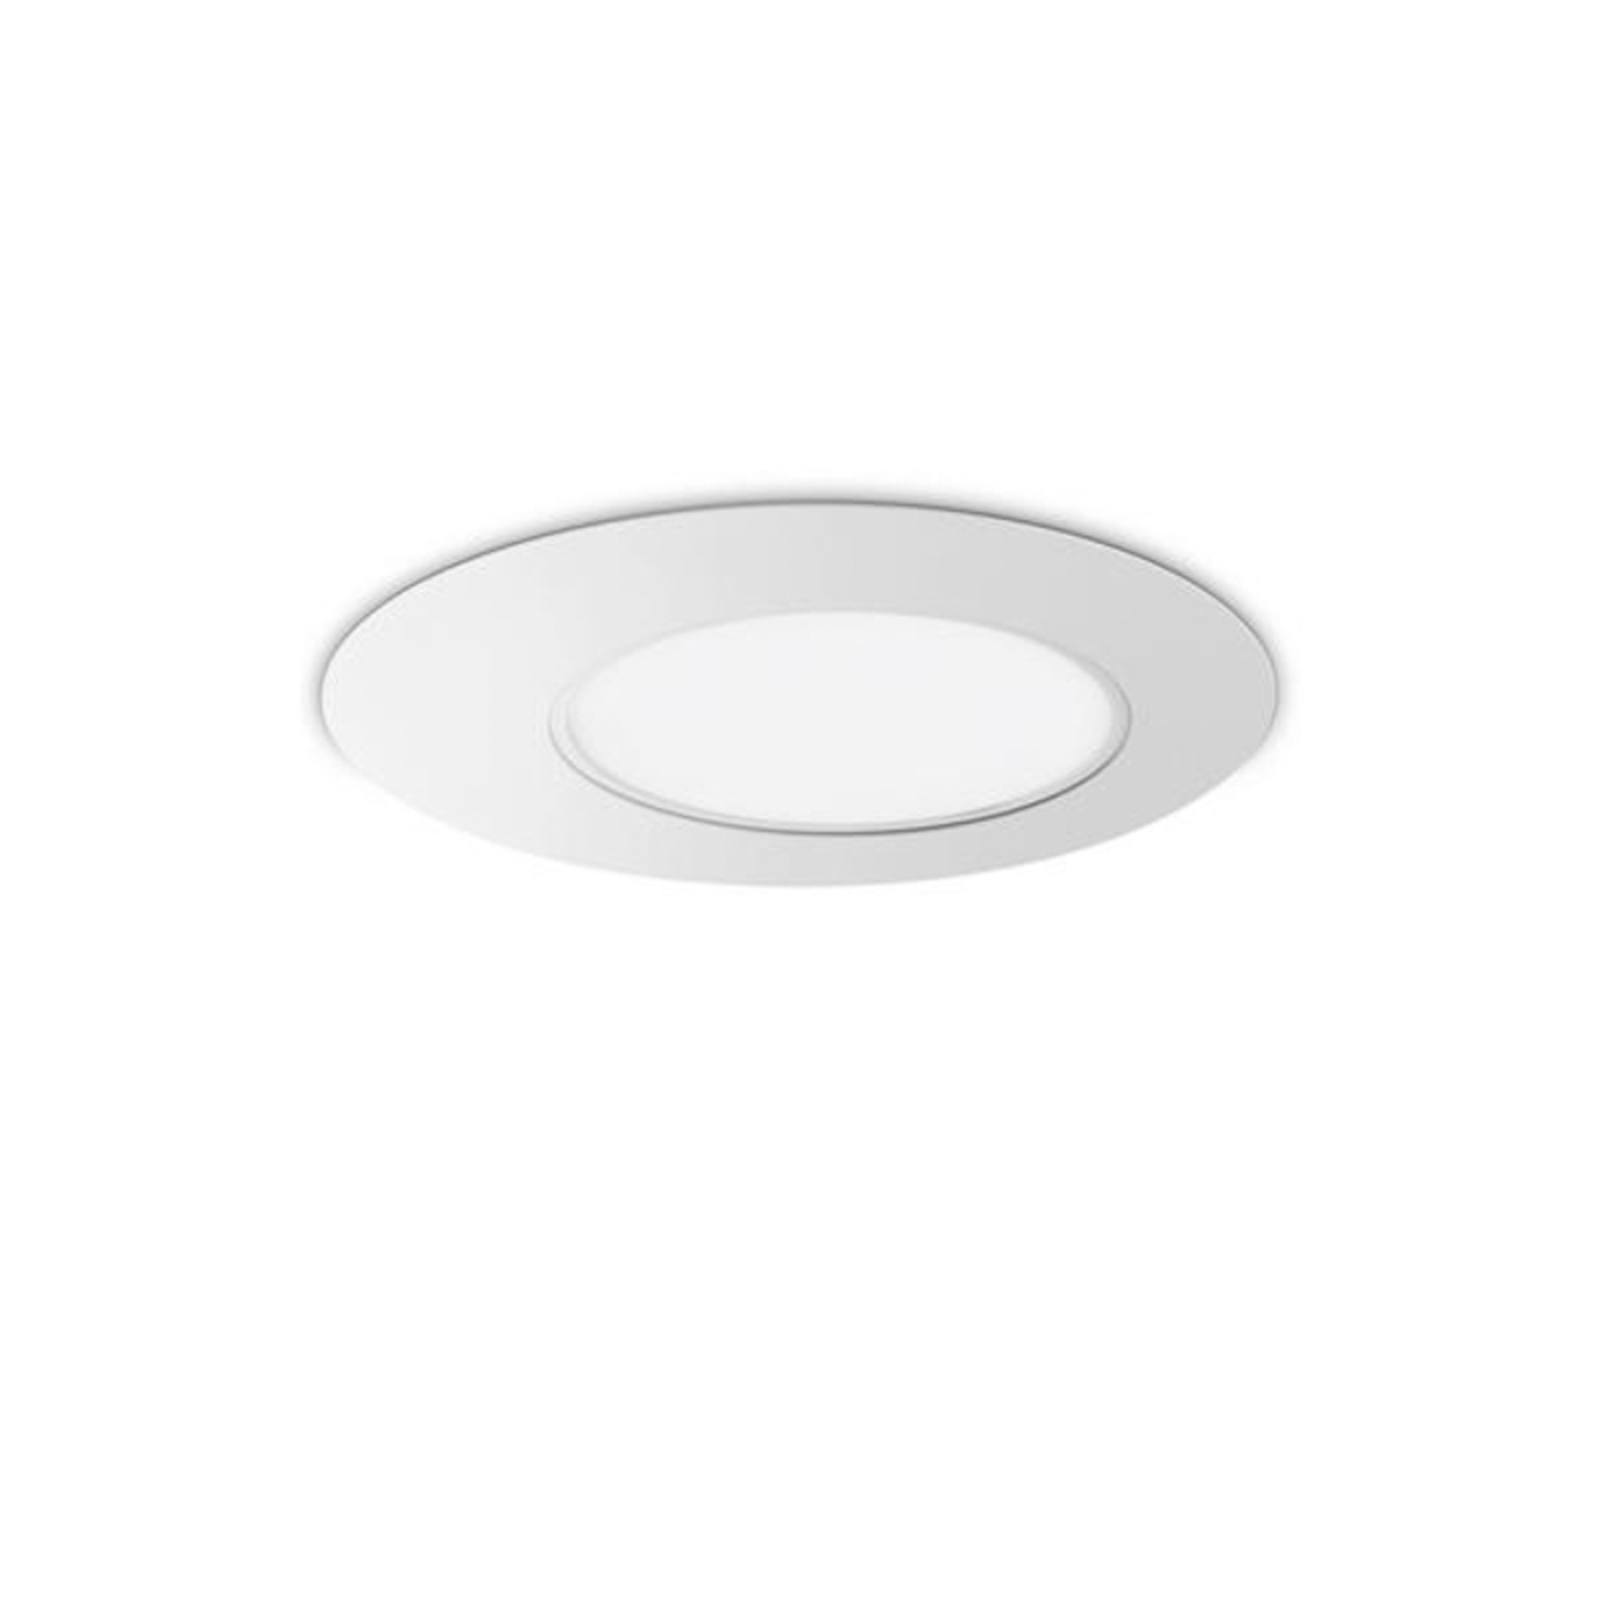 Ideal Lux LED ceiling light Iride, white, Ø 60 cm, metal